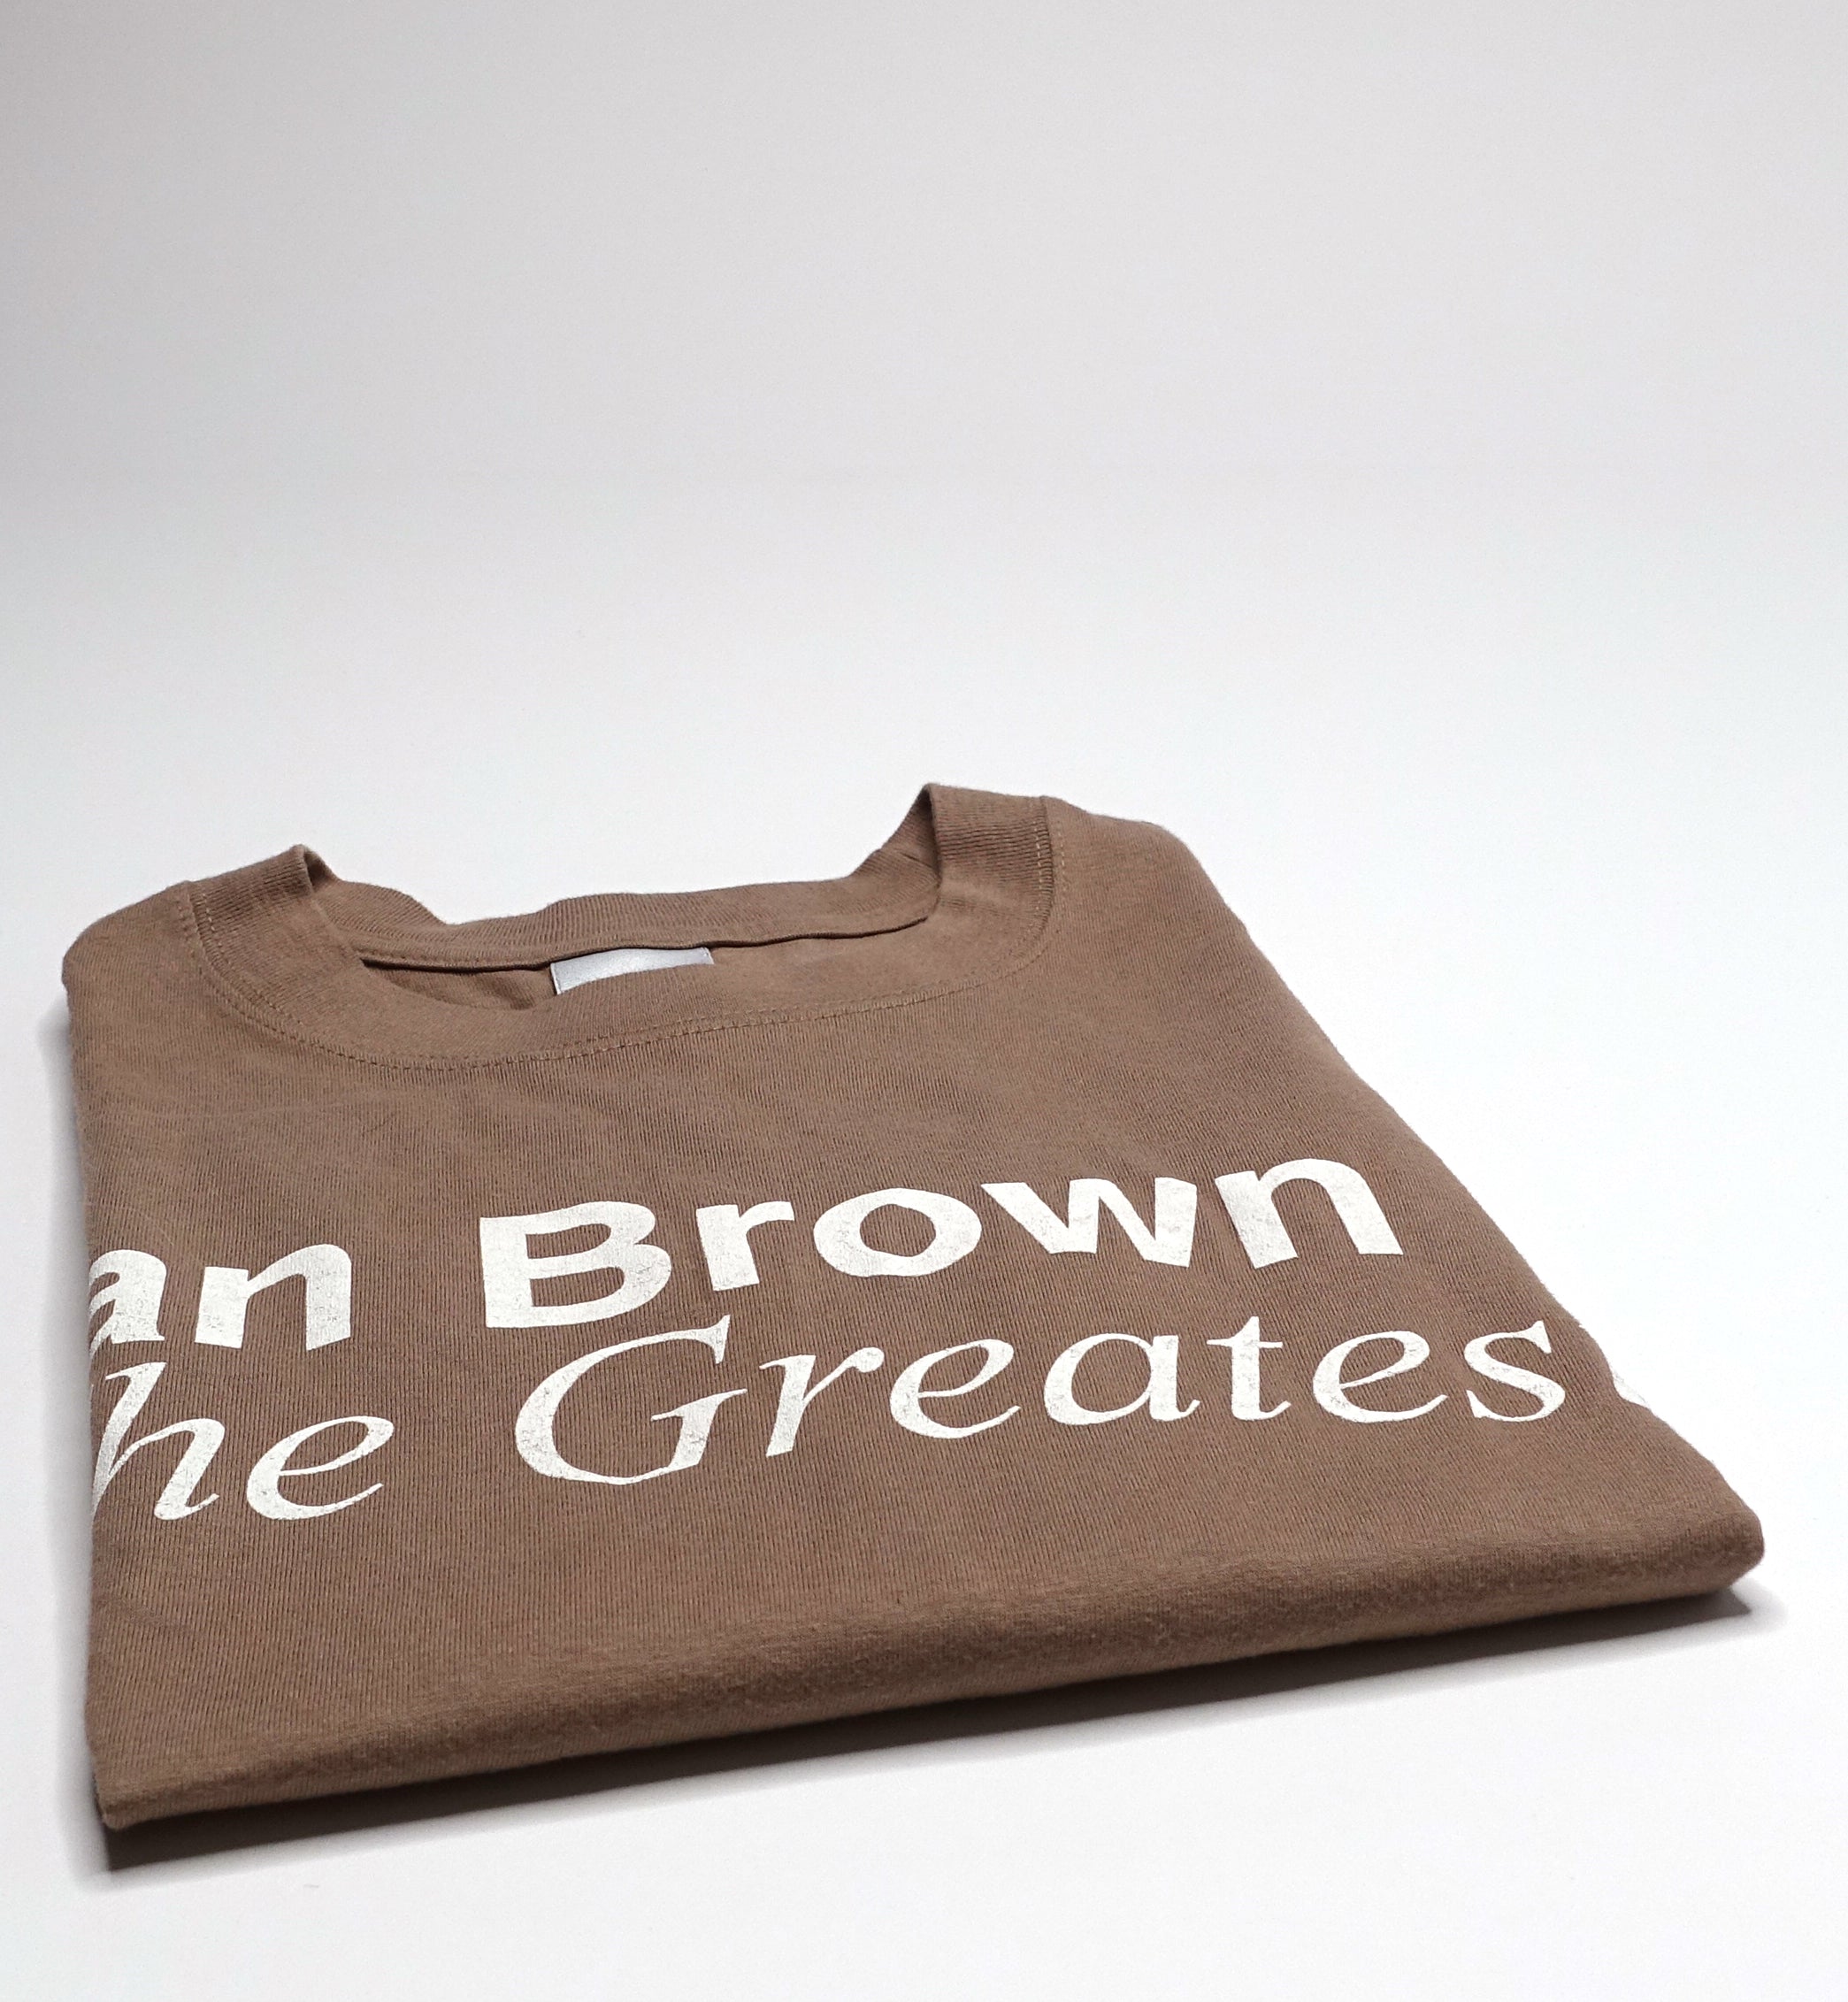 Ian Brown - The Greatest / Golden Greats 1999 UK Tour Shirt Size Large